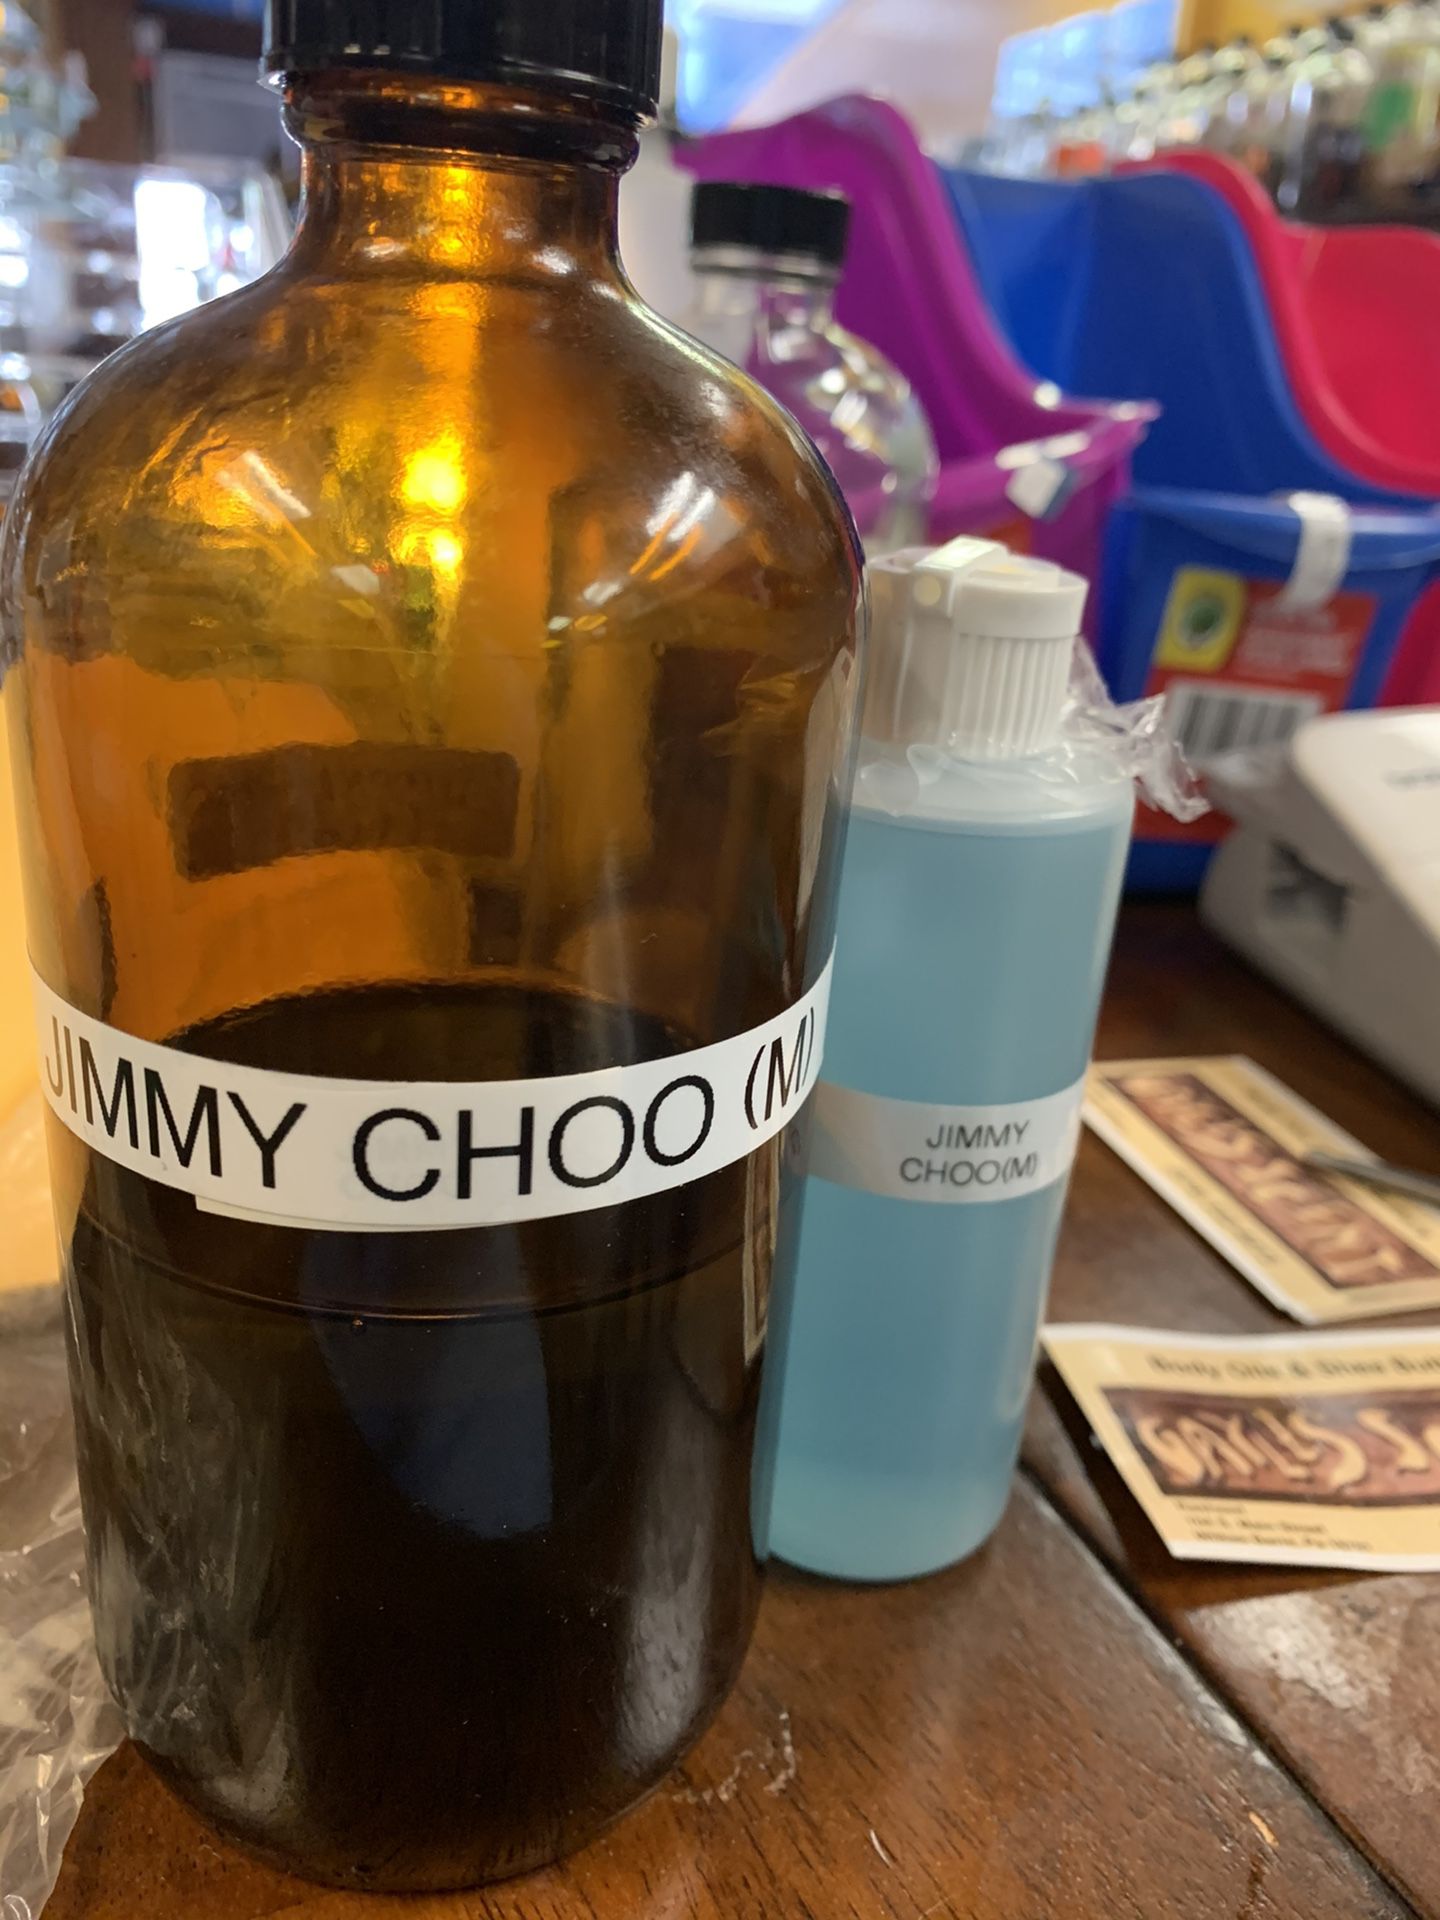 Jimmy choo (m) body oil fragrances 4oz plastic